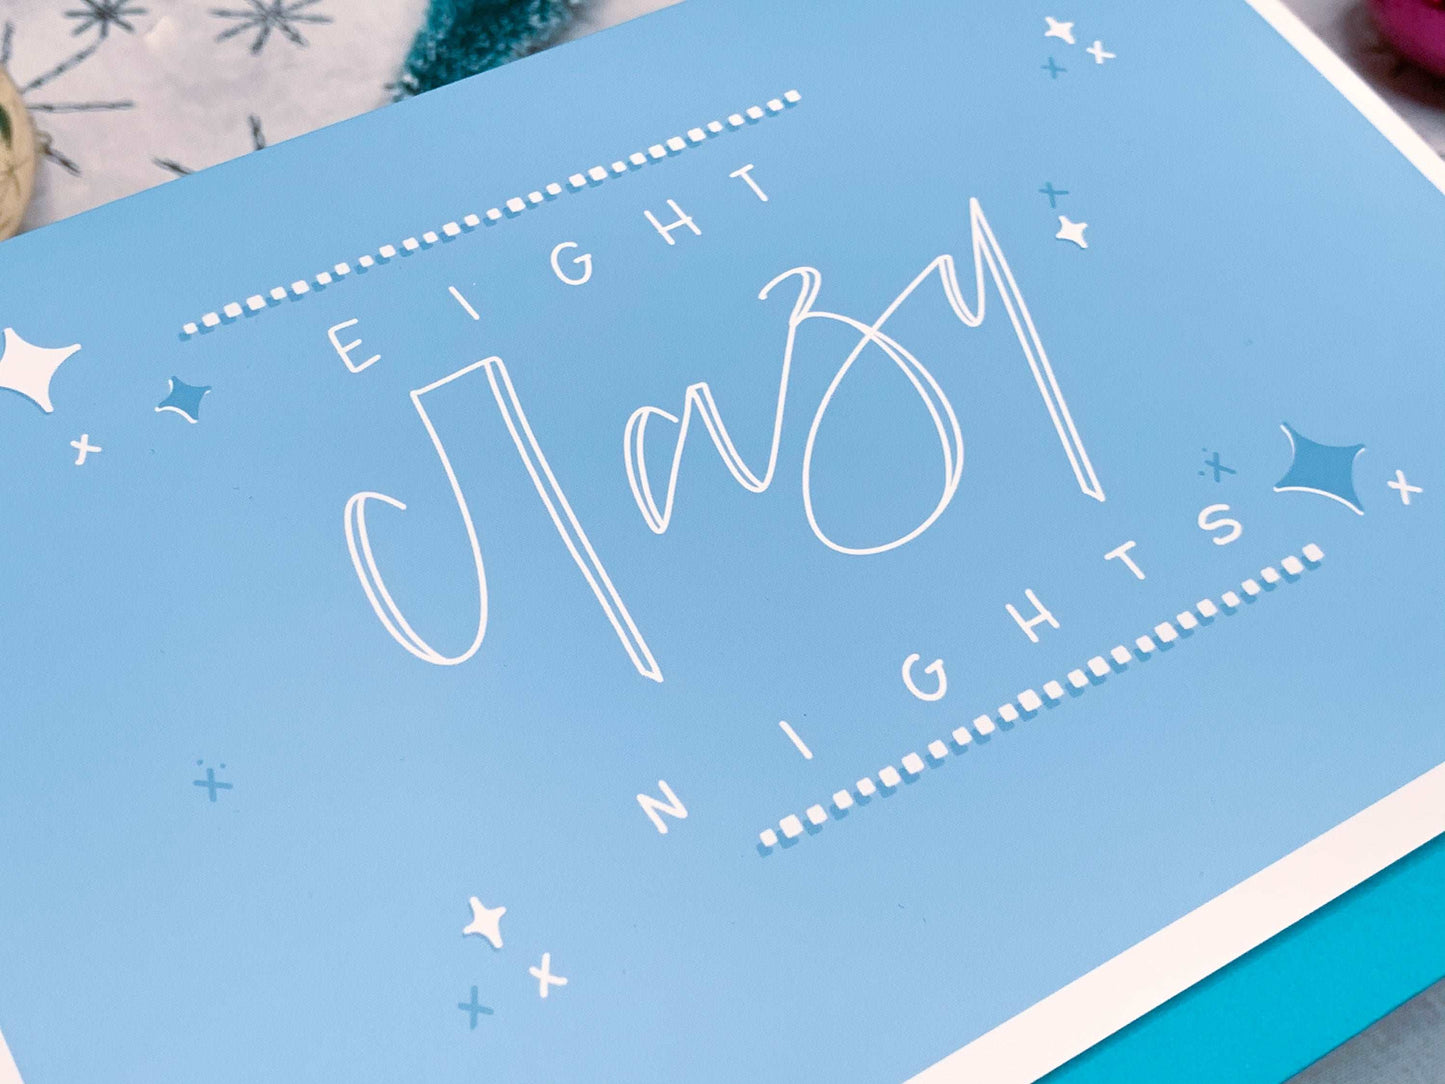 Eight Crazy Nights Hanukkah Card by StoneDonut Design